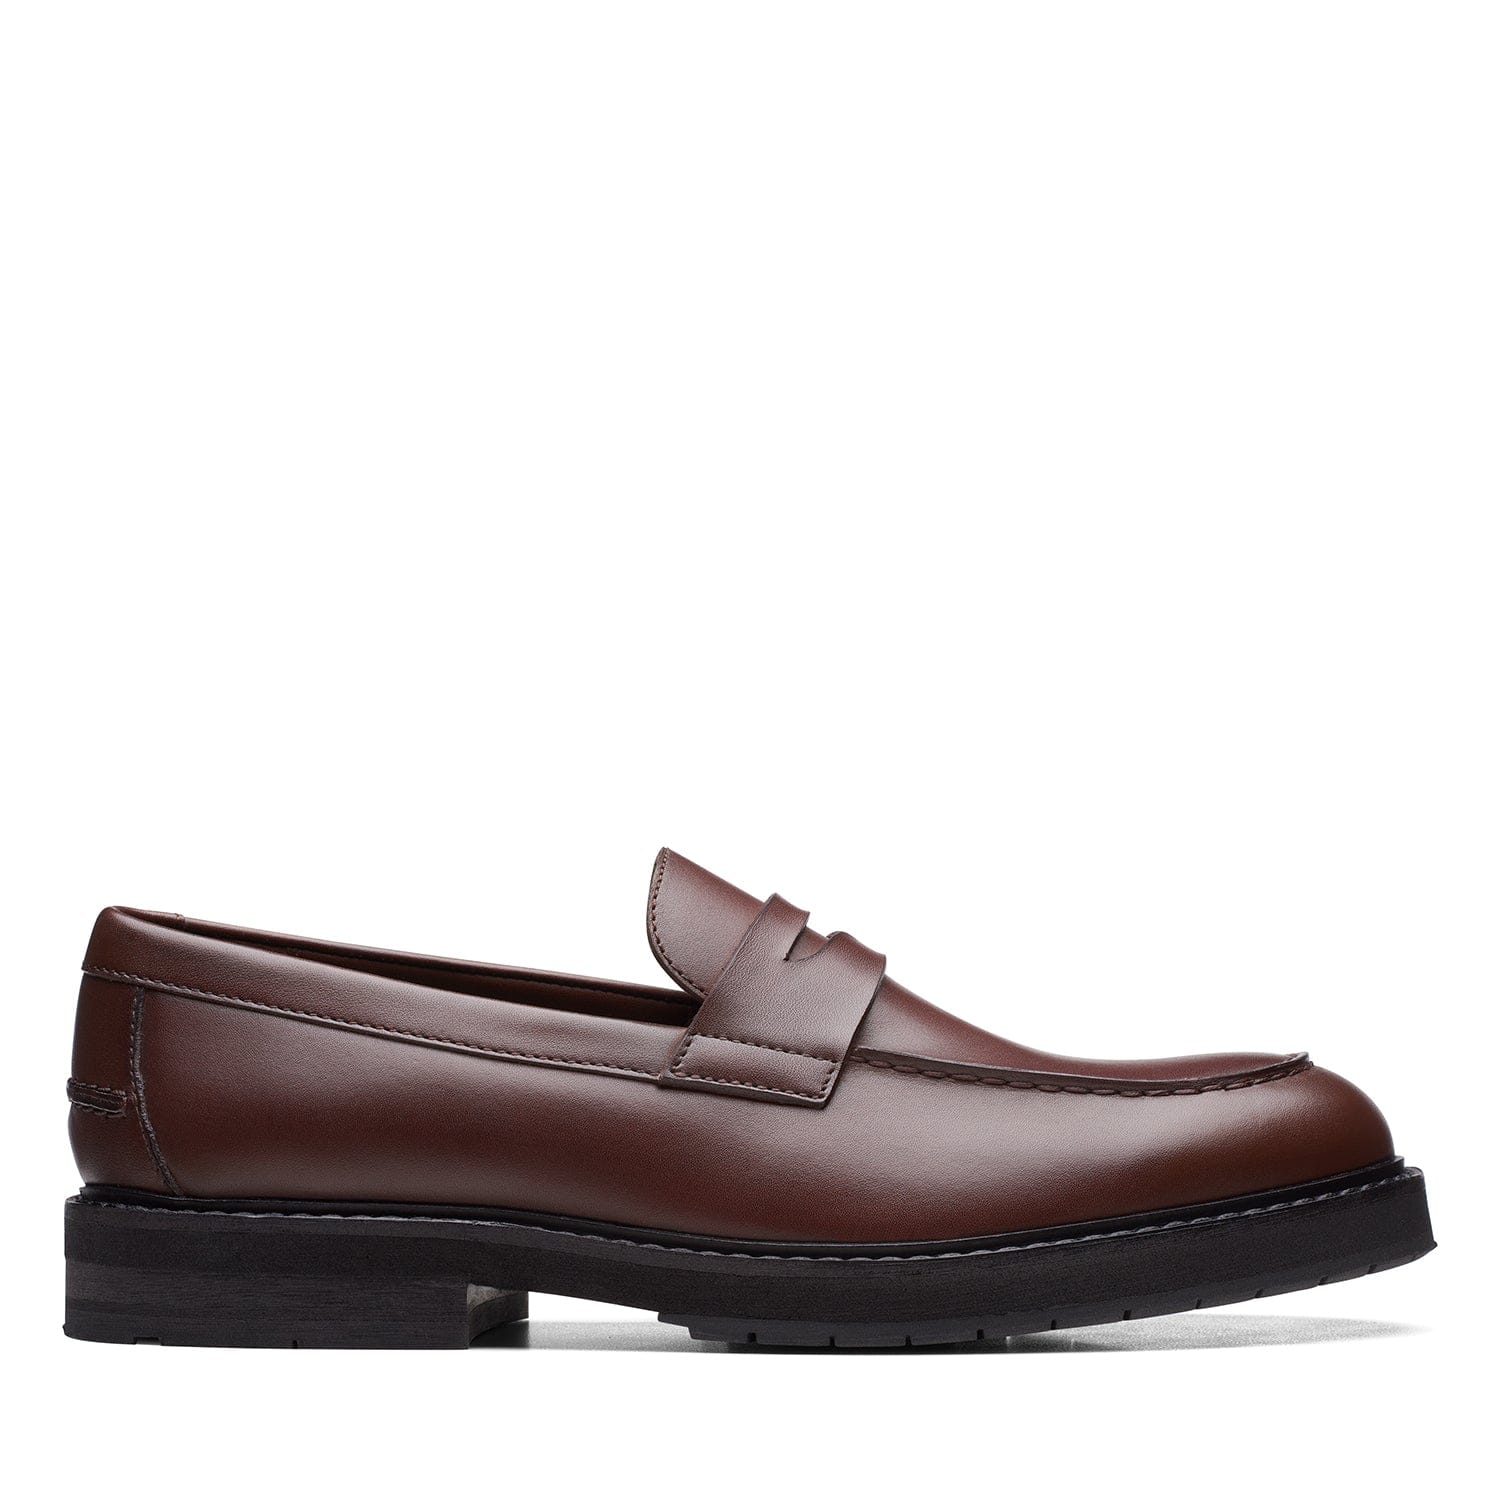 Clarks CraftNorth Lo Shoes - British Tan Lea - 261709037 - G Width (Standard Fit)